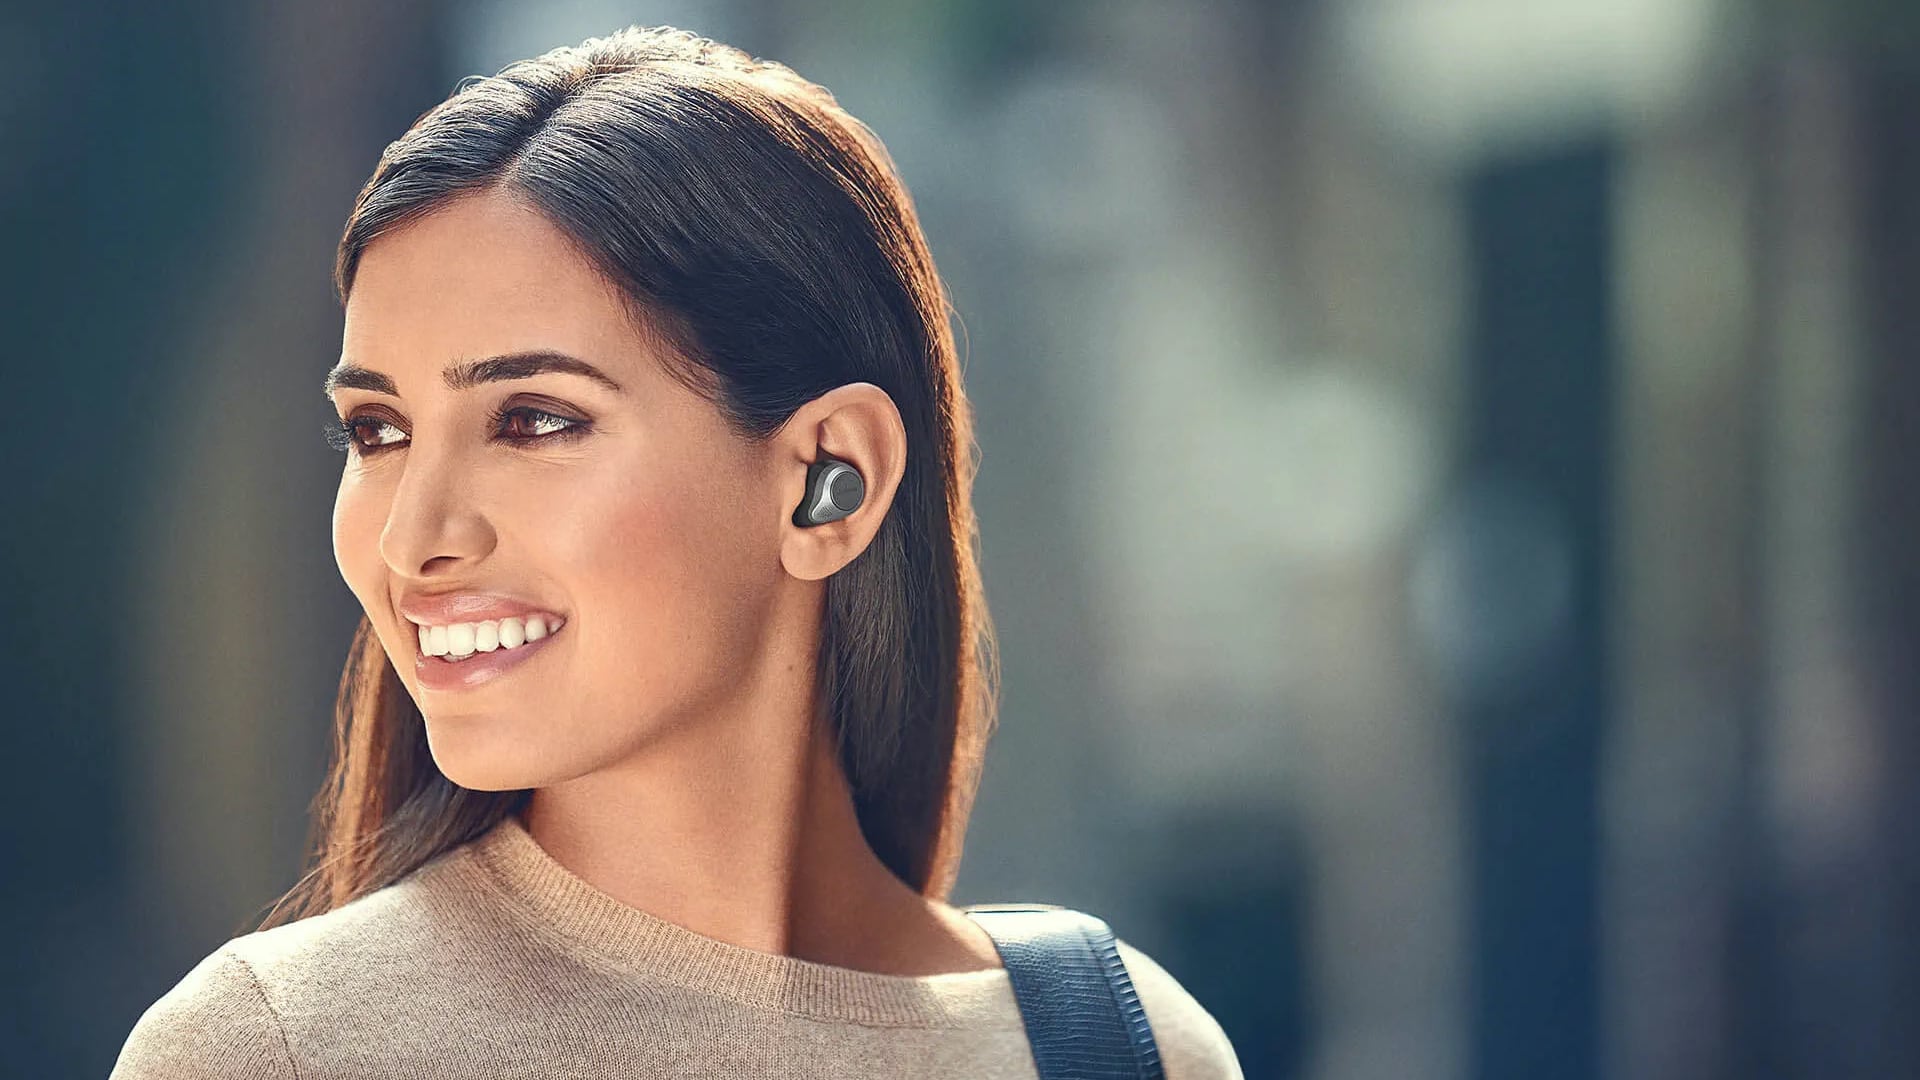 Jabra Elite 85t true wireless earbuds offer HearThrough mode for